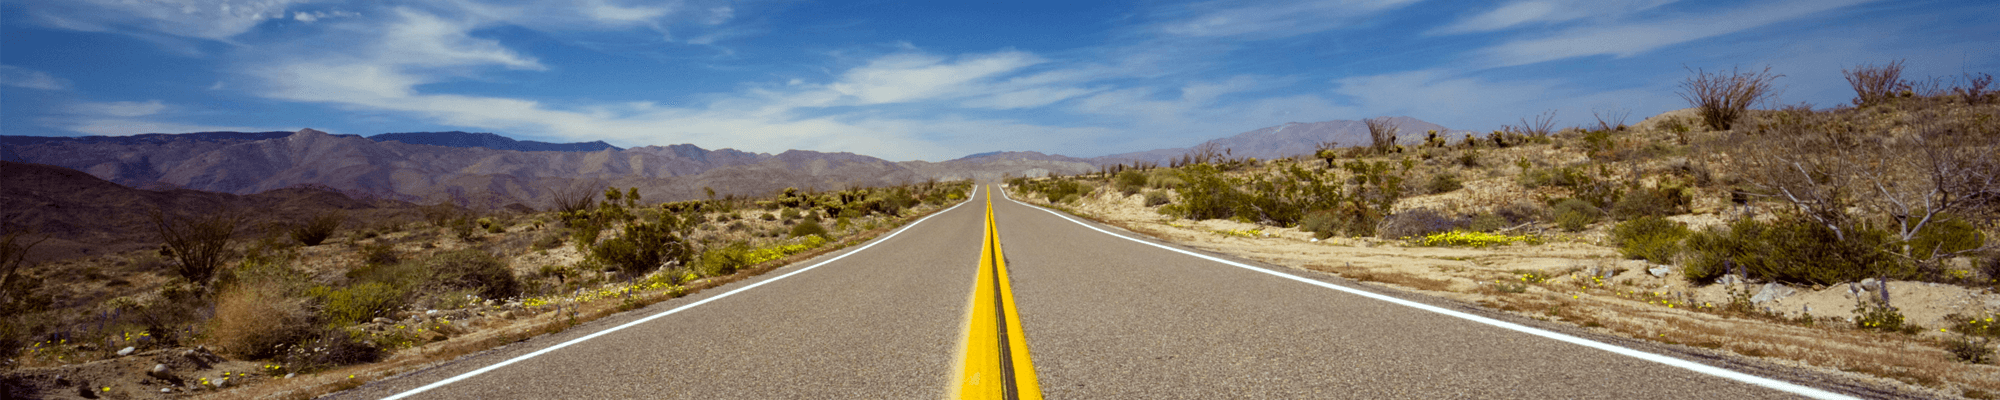 two lane road in the desert